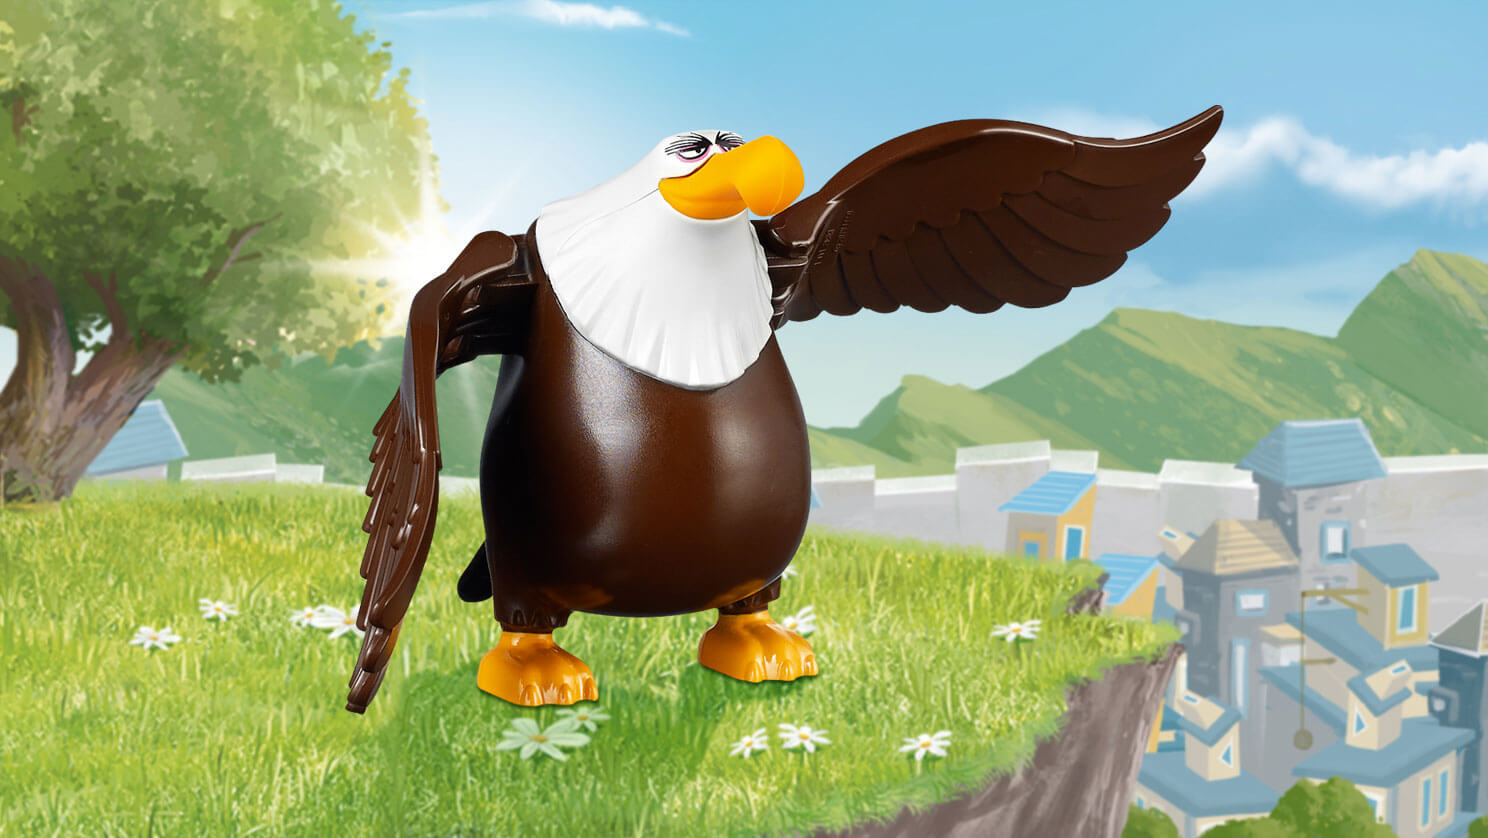 Angry birds eagle. Могучий Орел Энгри бердз. Могучий орёл из Angry Birds. Итон могучий Орел.